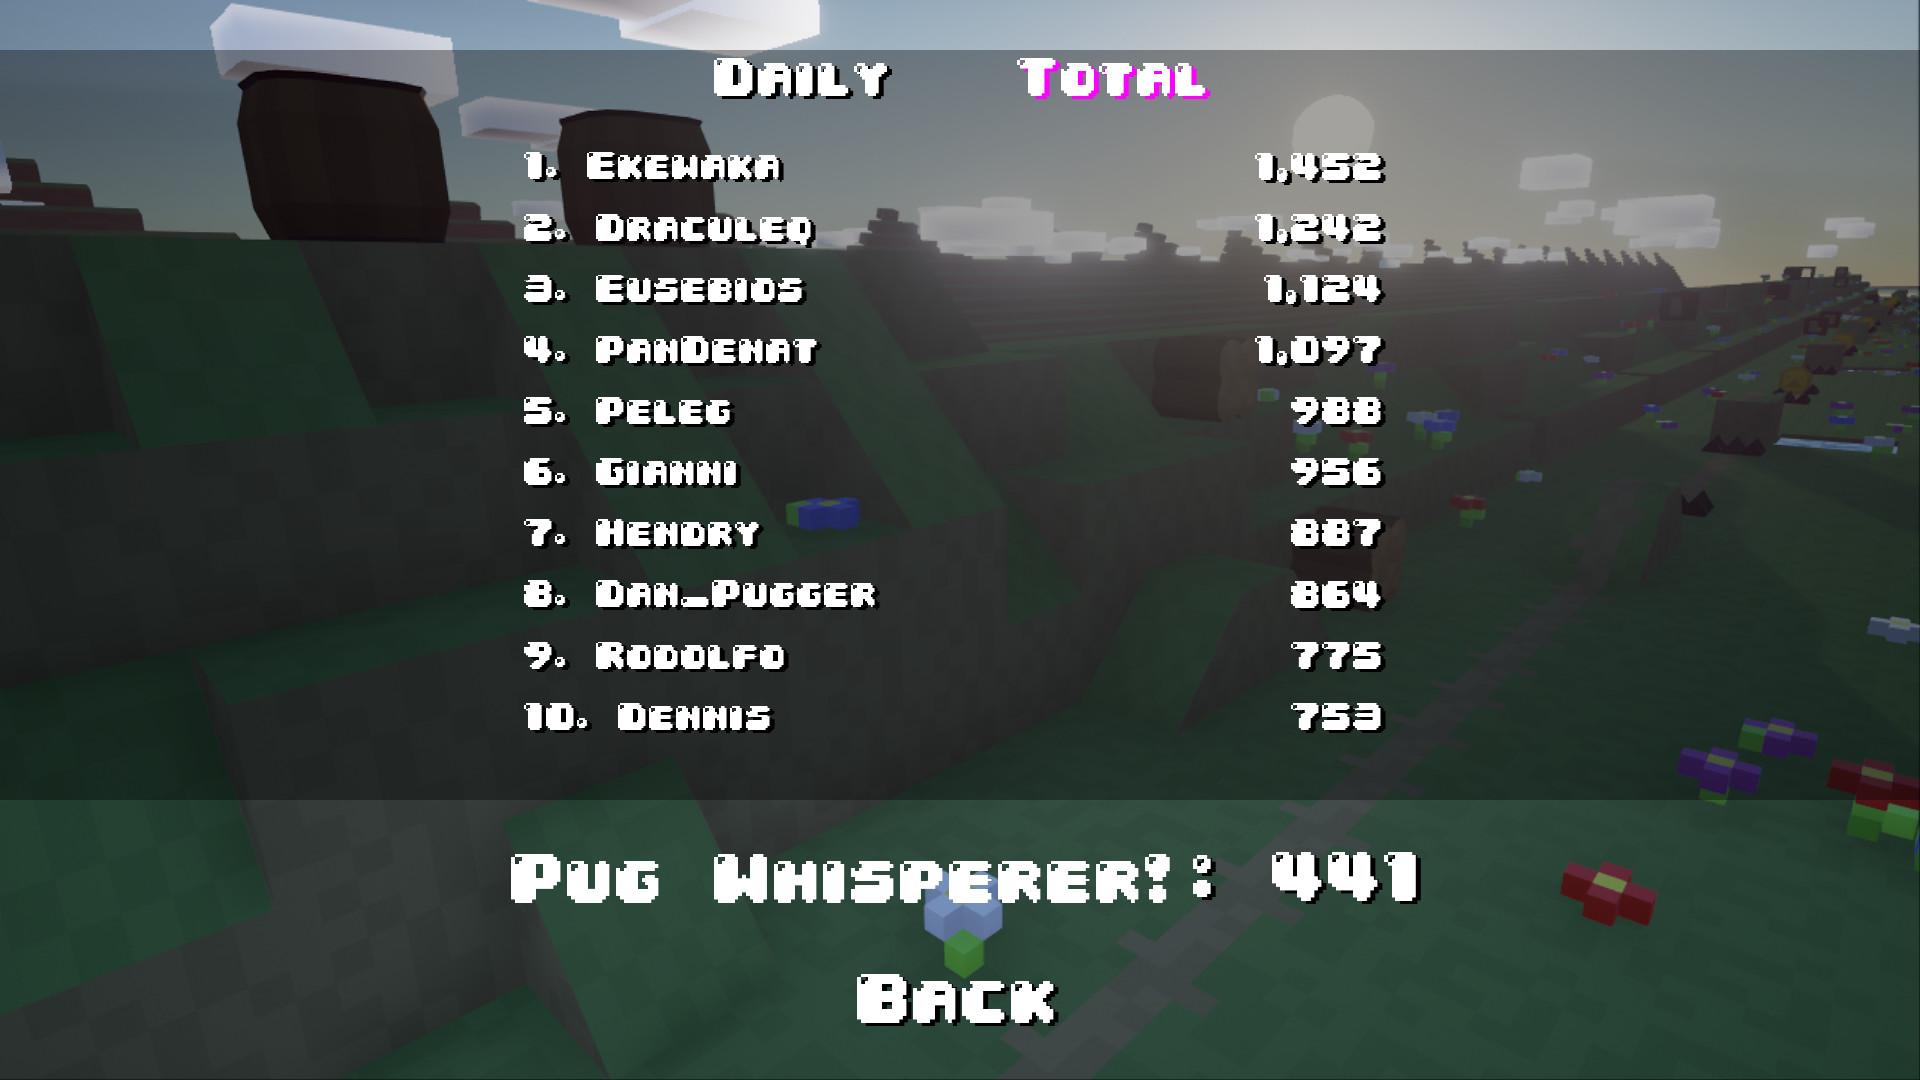 Screenshot №5 from game Turbo Pug 3D